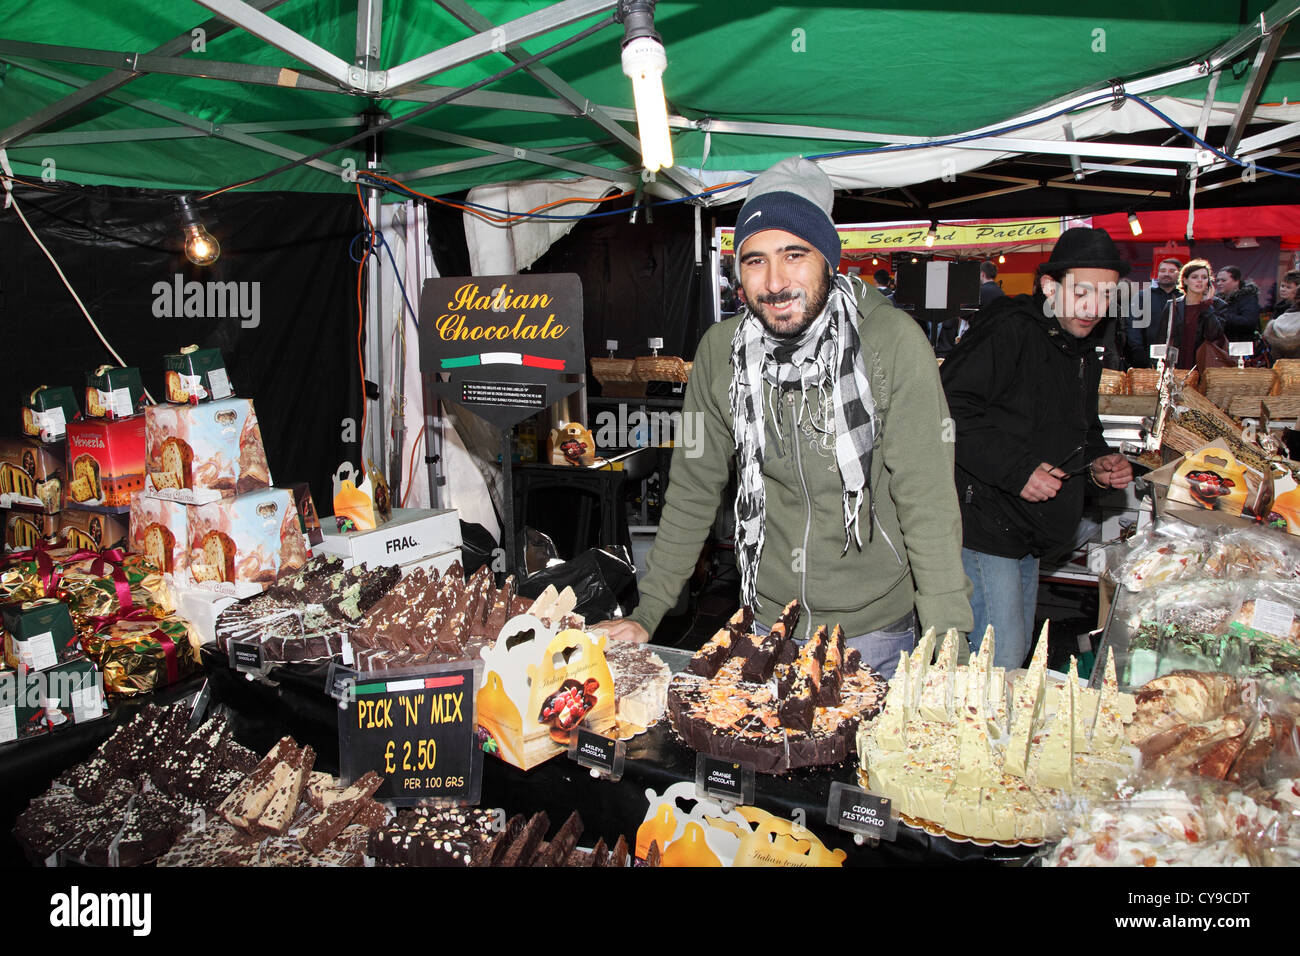 Italian chocolate stall Durham City food festival, north east England, UK Stock Photo